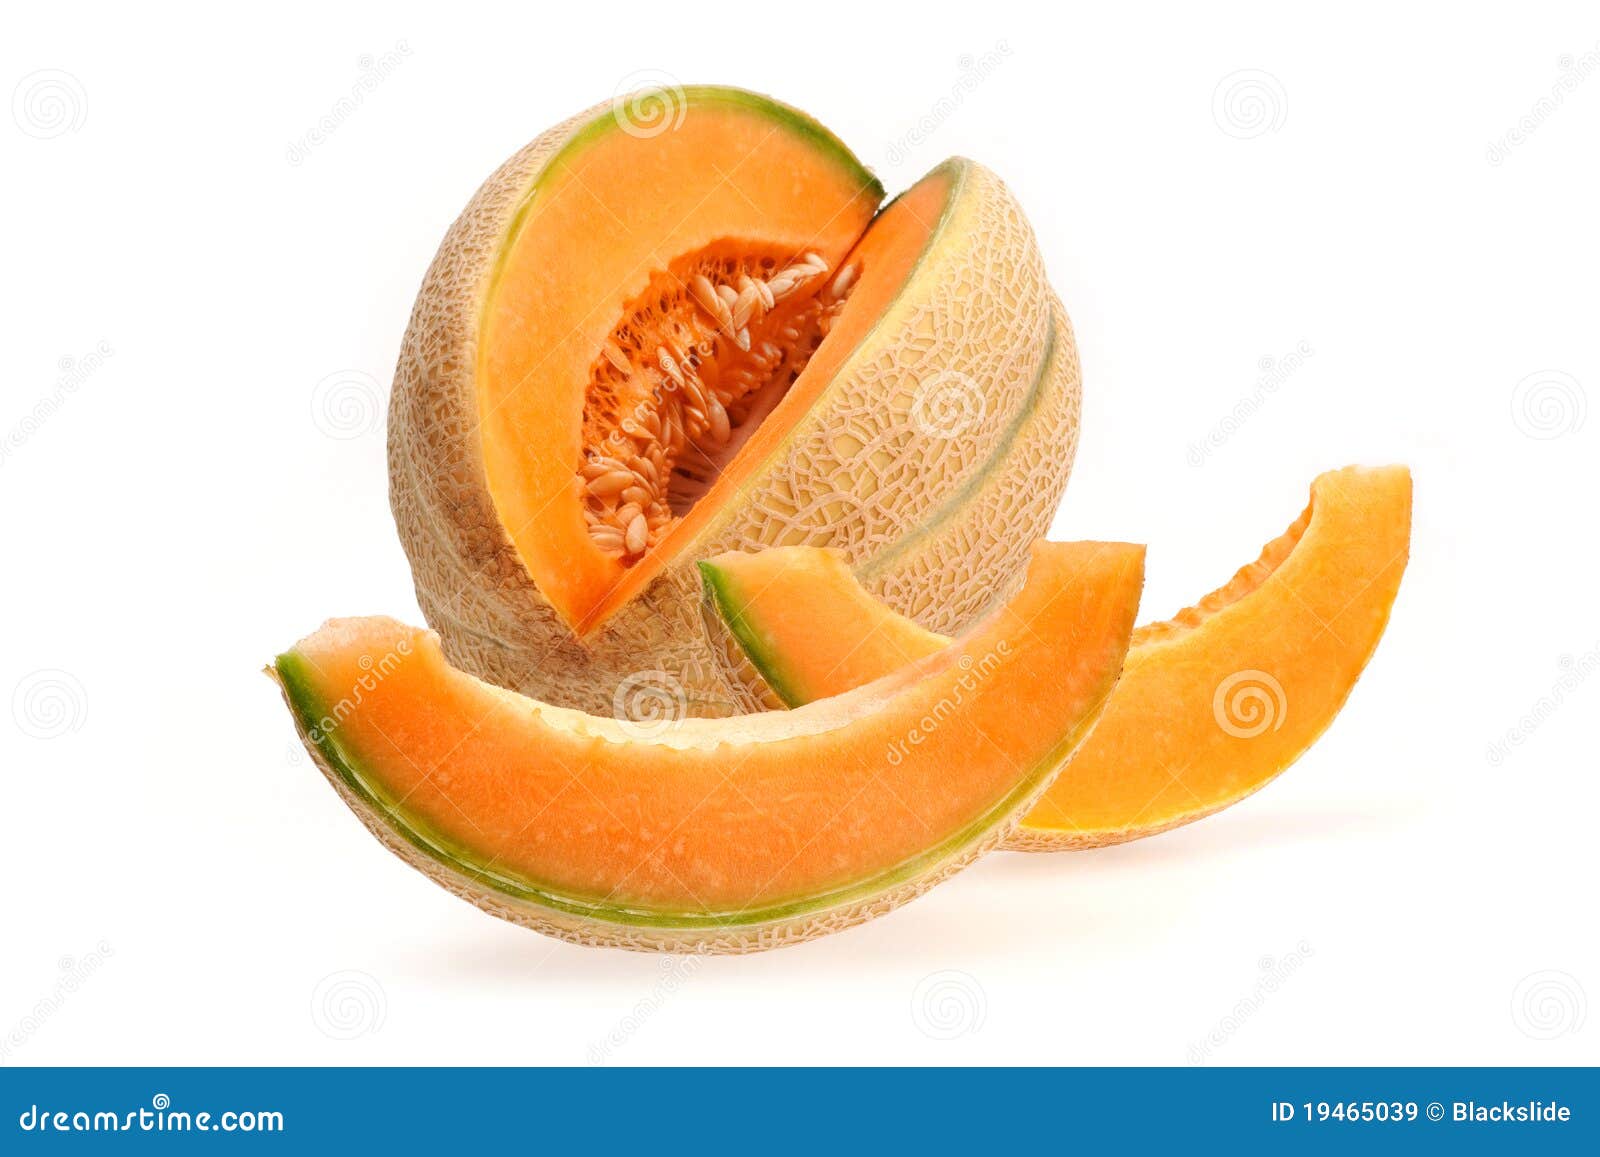 cut melon